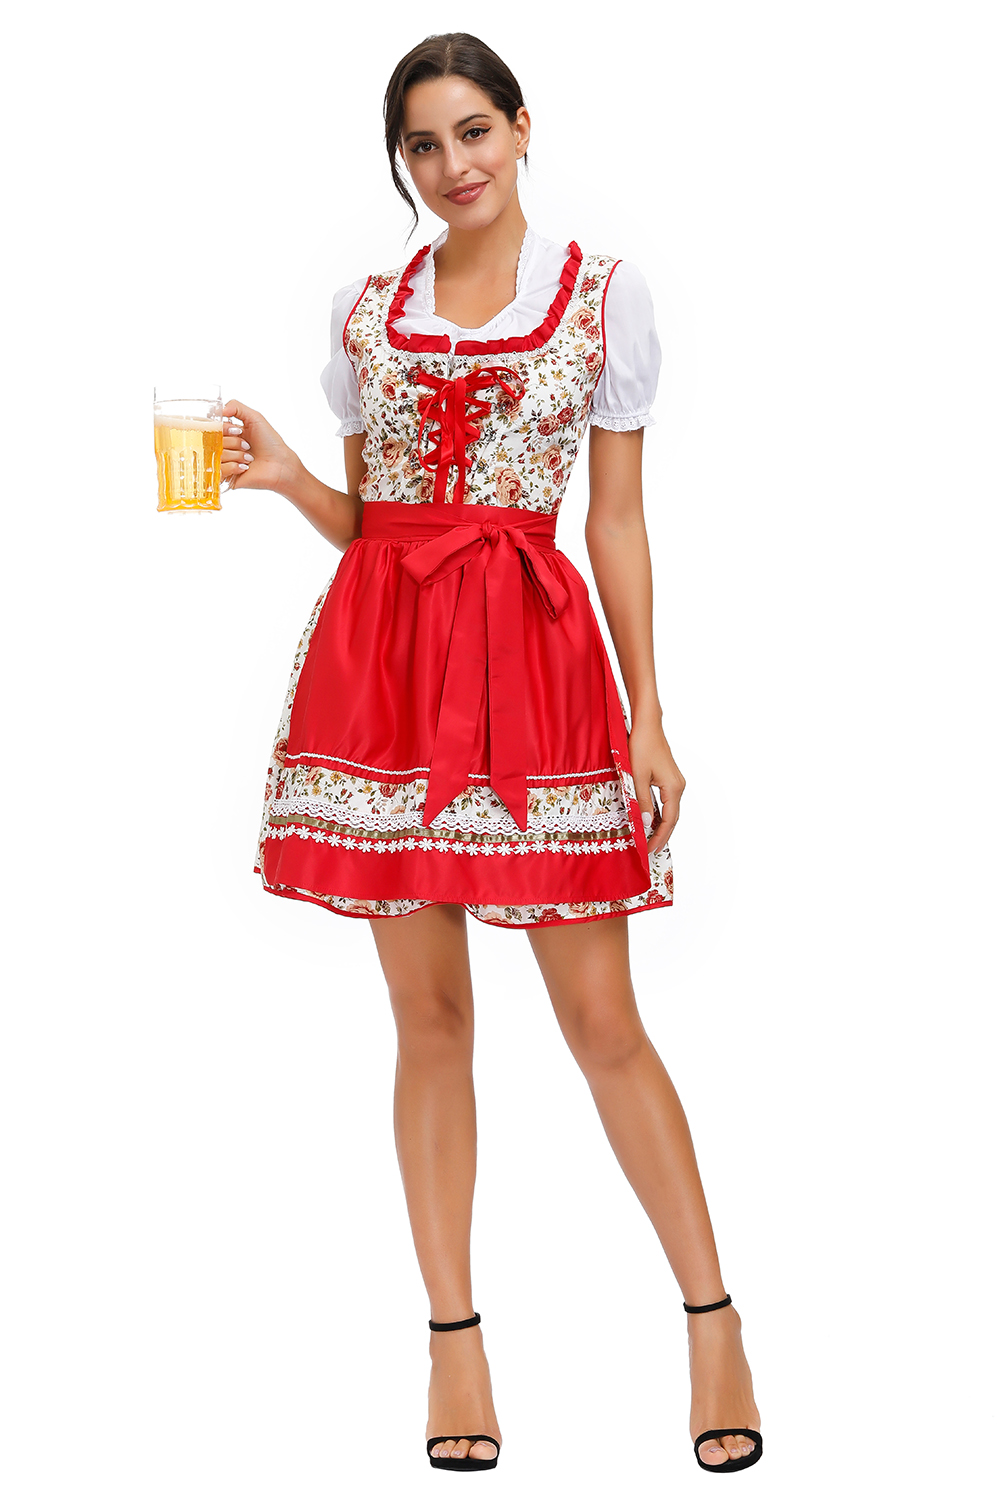 New Oktoberfest Costume Sexy Beer Girl Dirndl Dress Costume